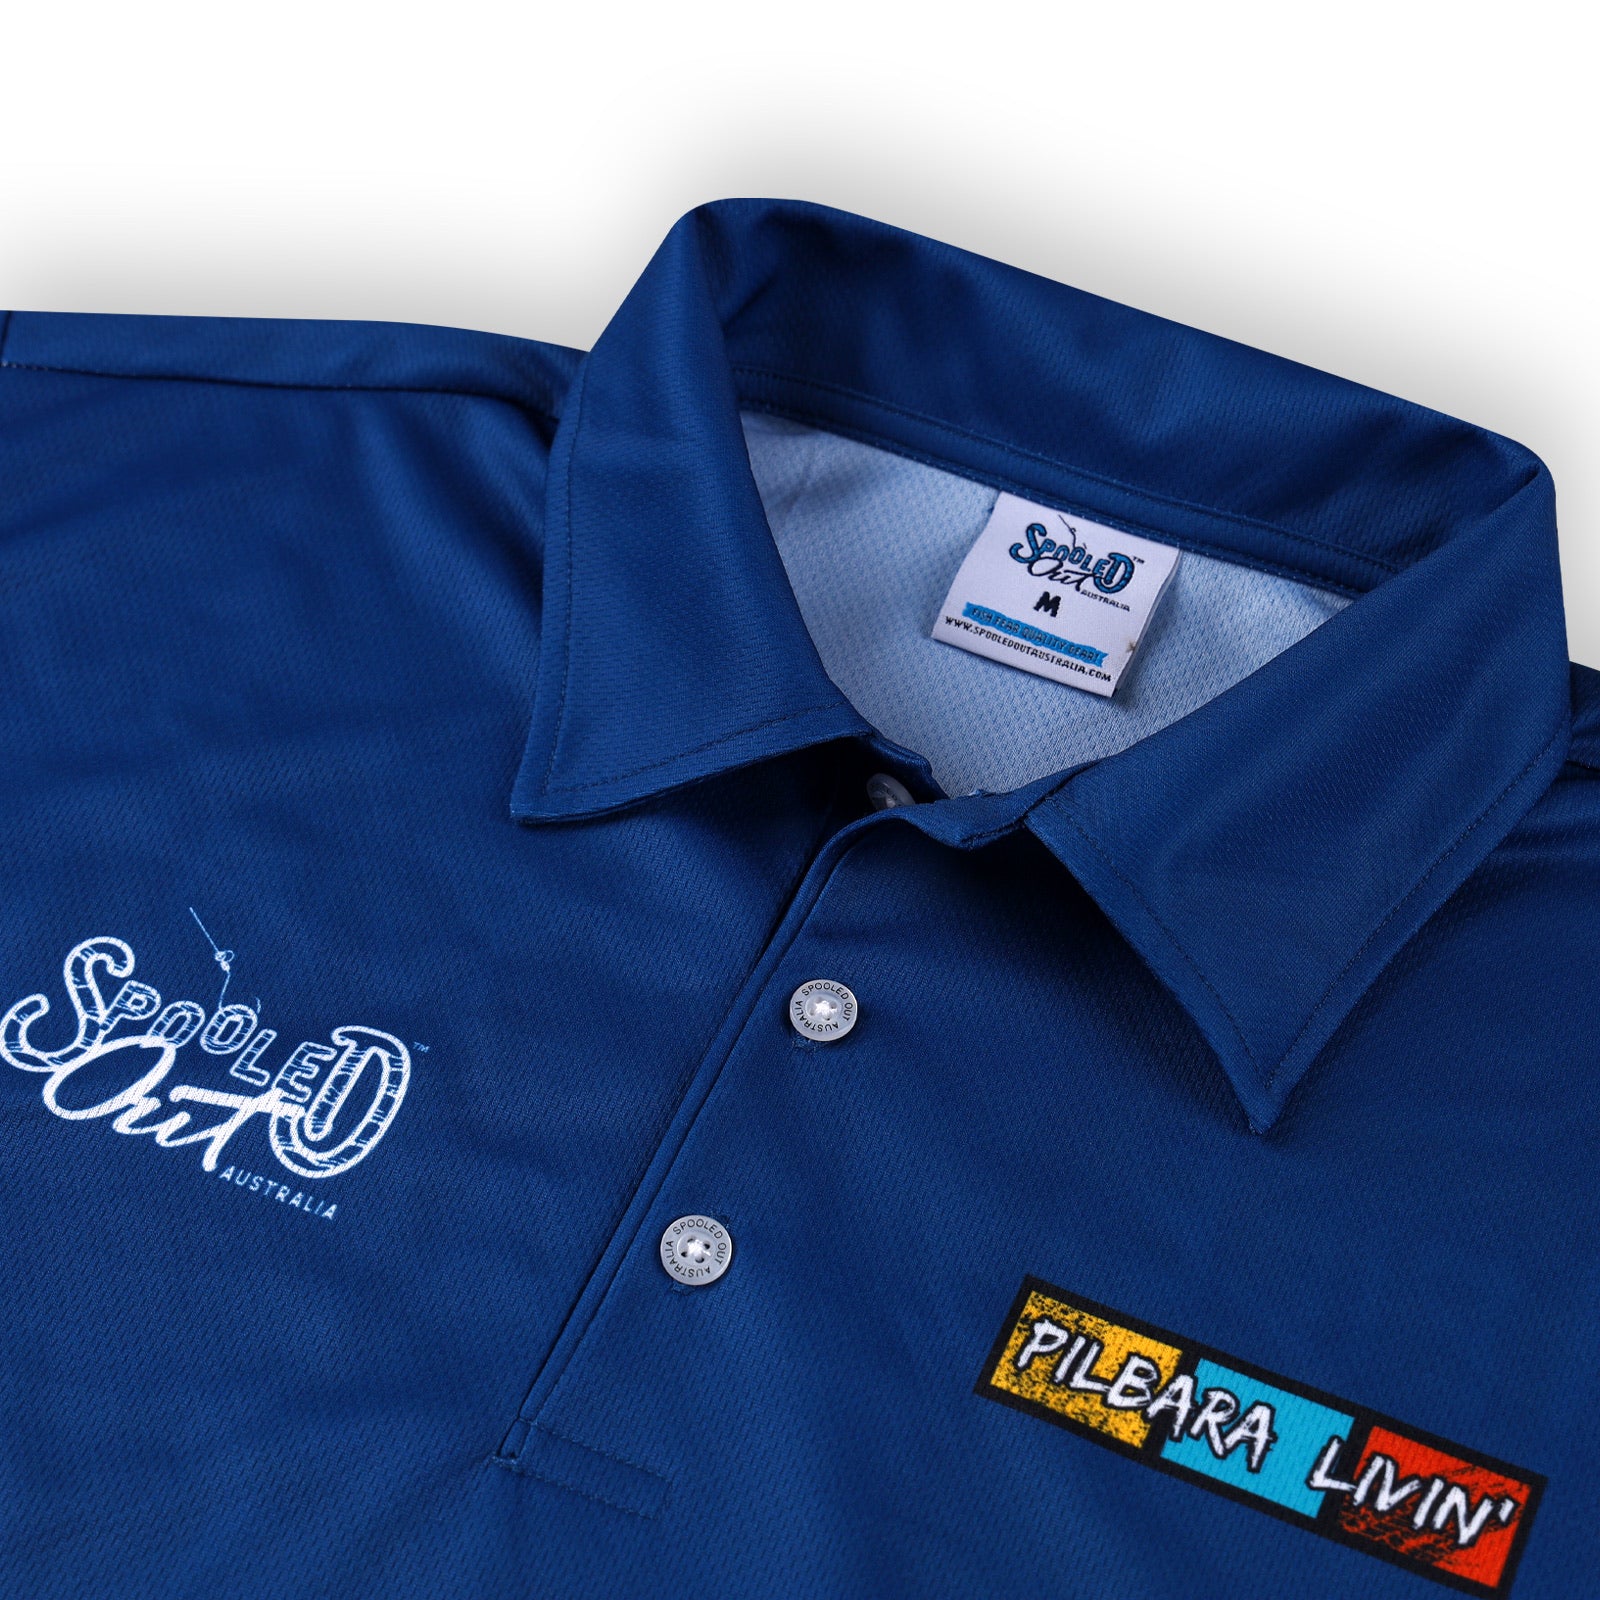 Nave Blue fishing shirt Pilbara Livin logo close up